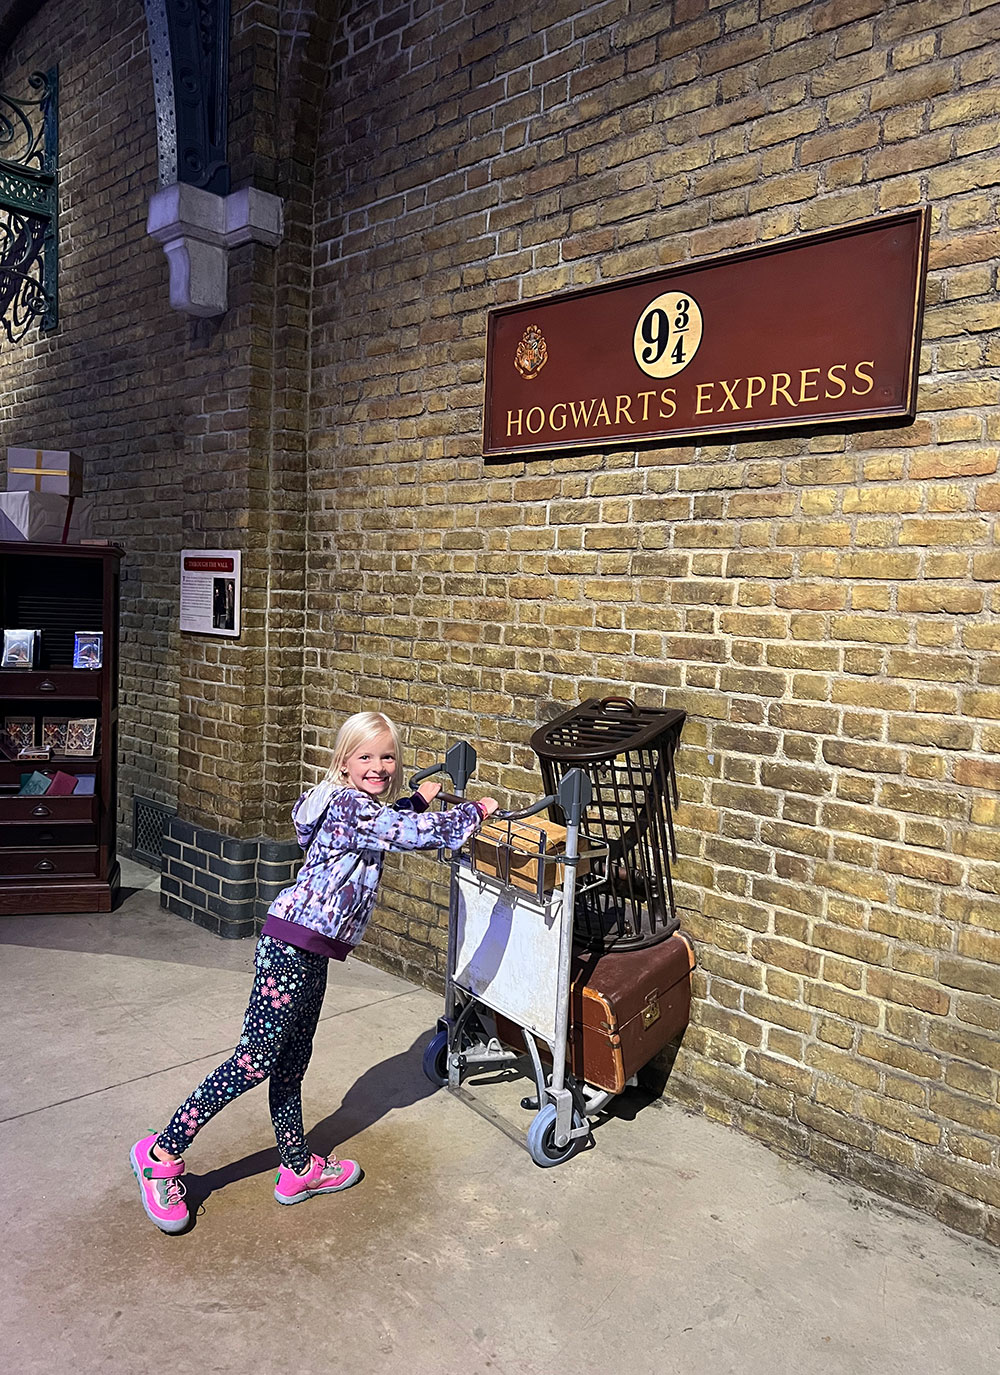 Hogwarts Express and Platform 9 3/4